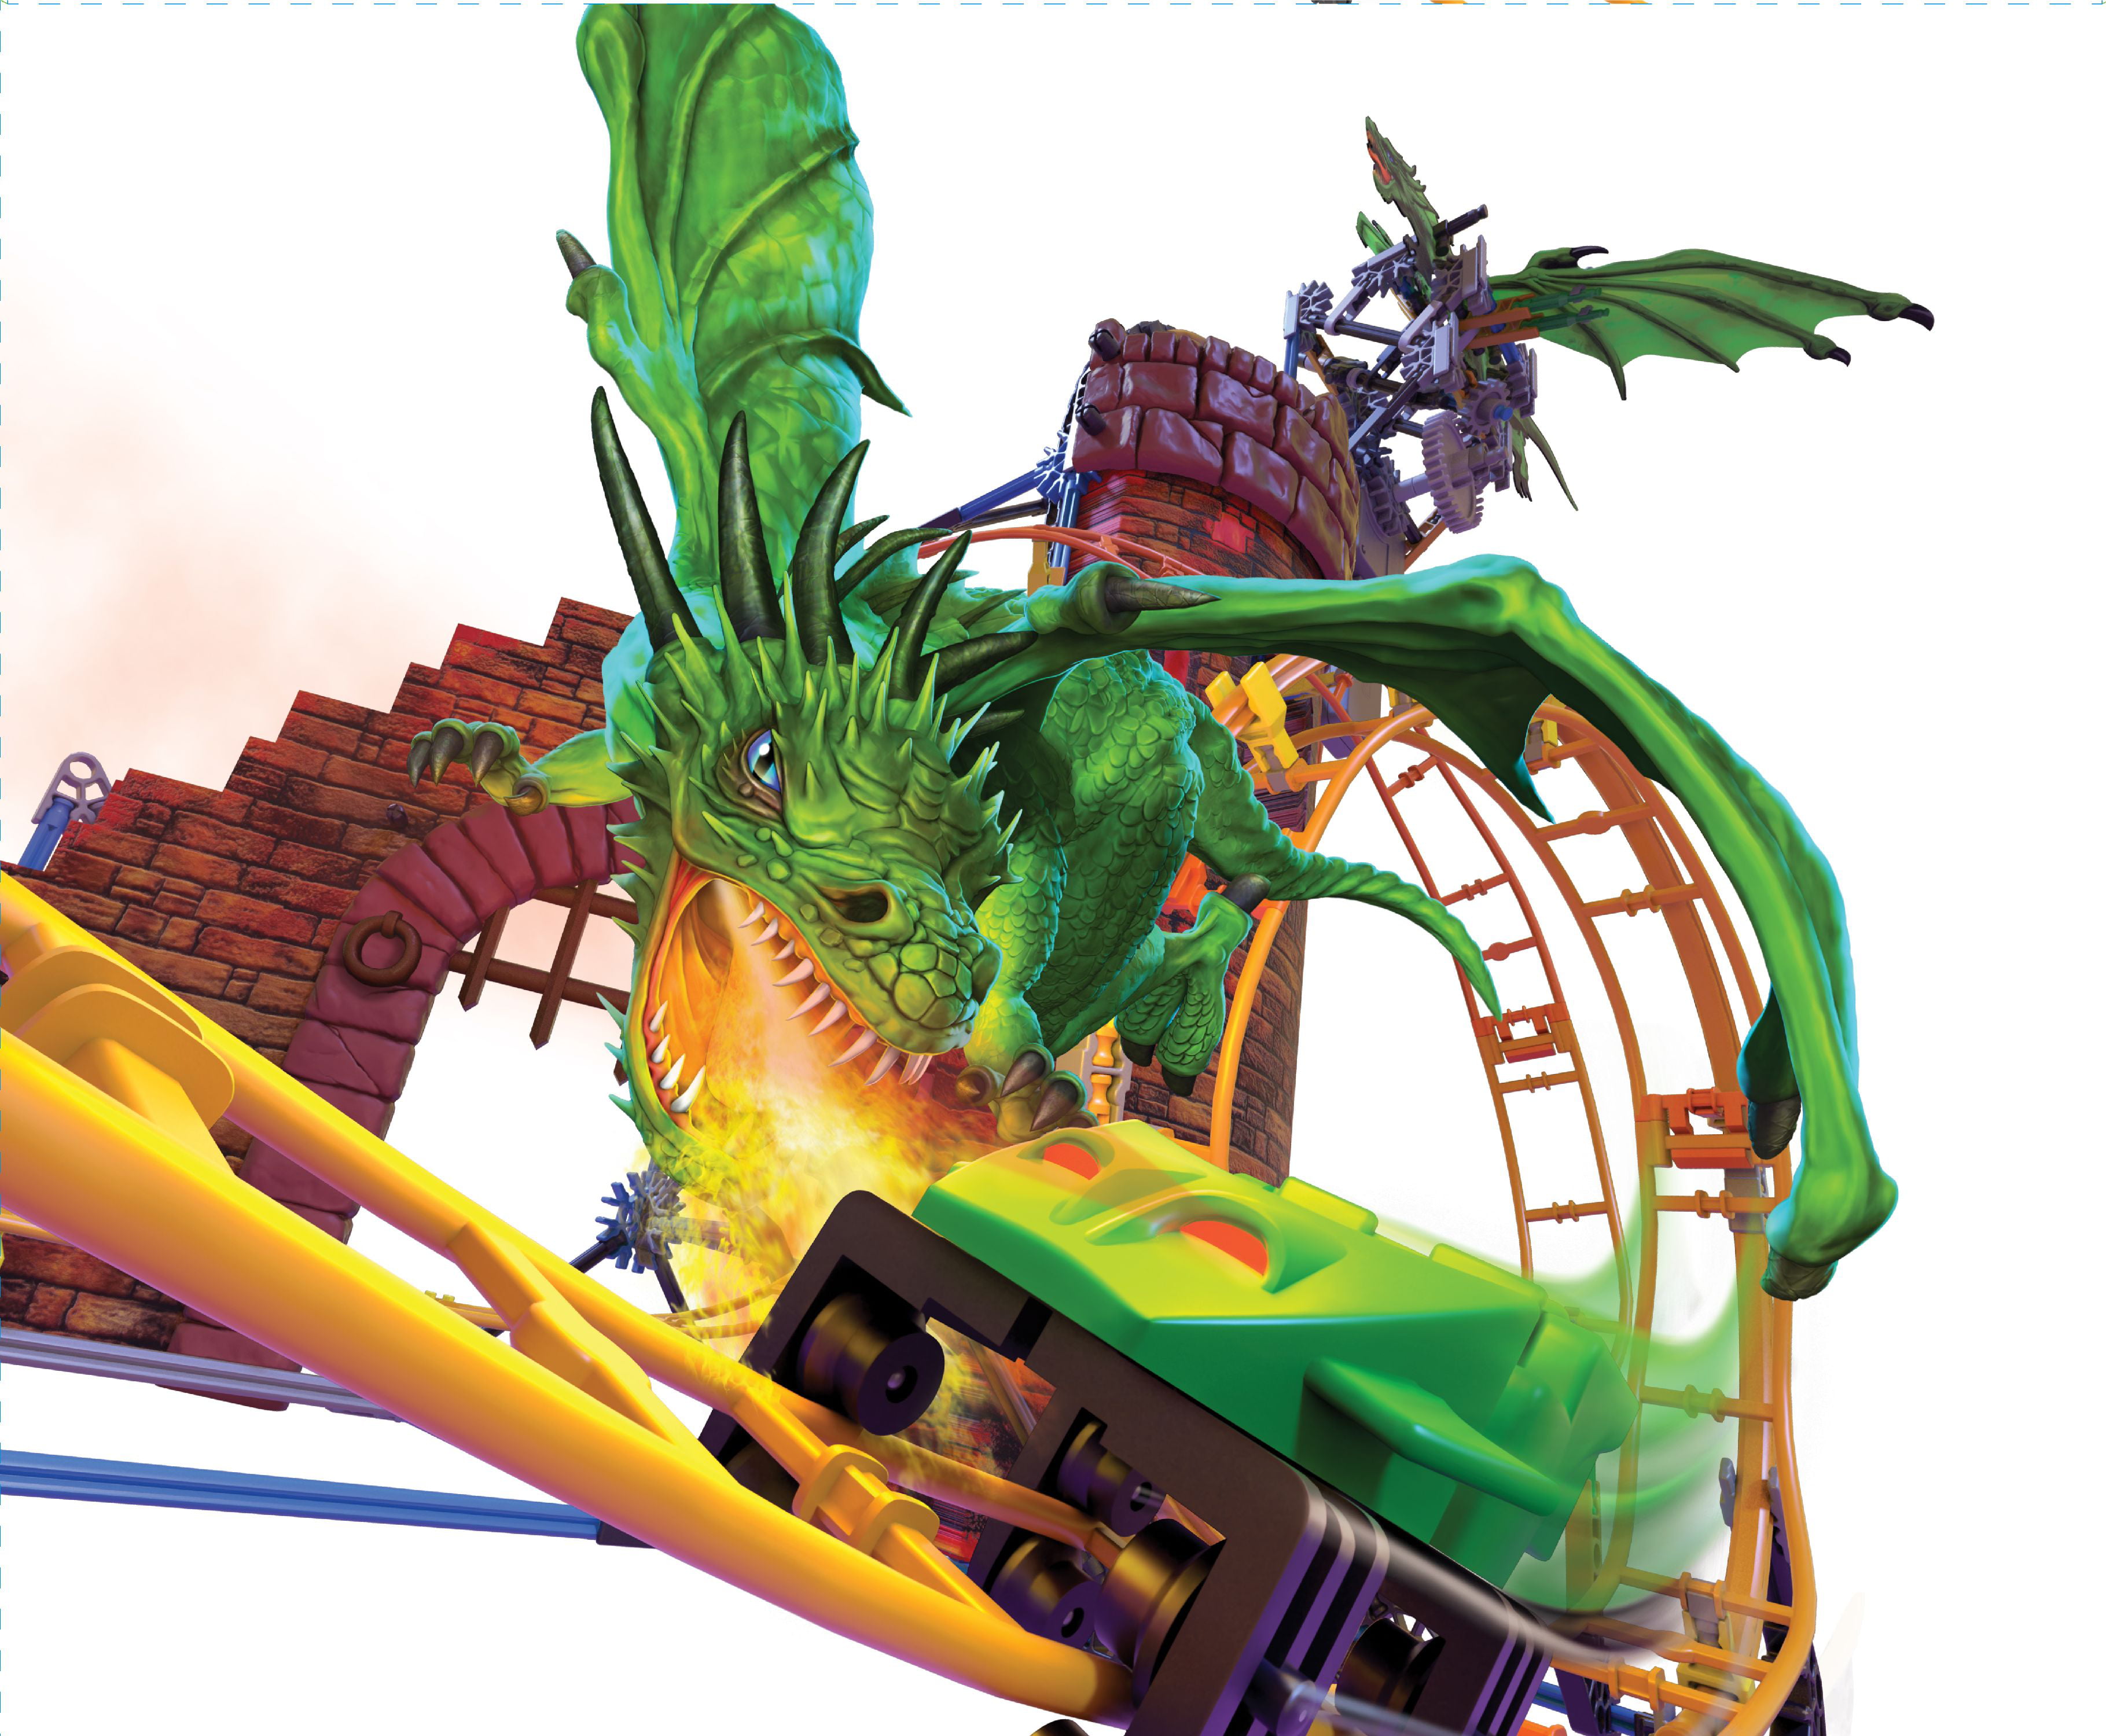 KNEX 34043 Rides Dragons Revenge Thrill Roller Coaster Building Set, 